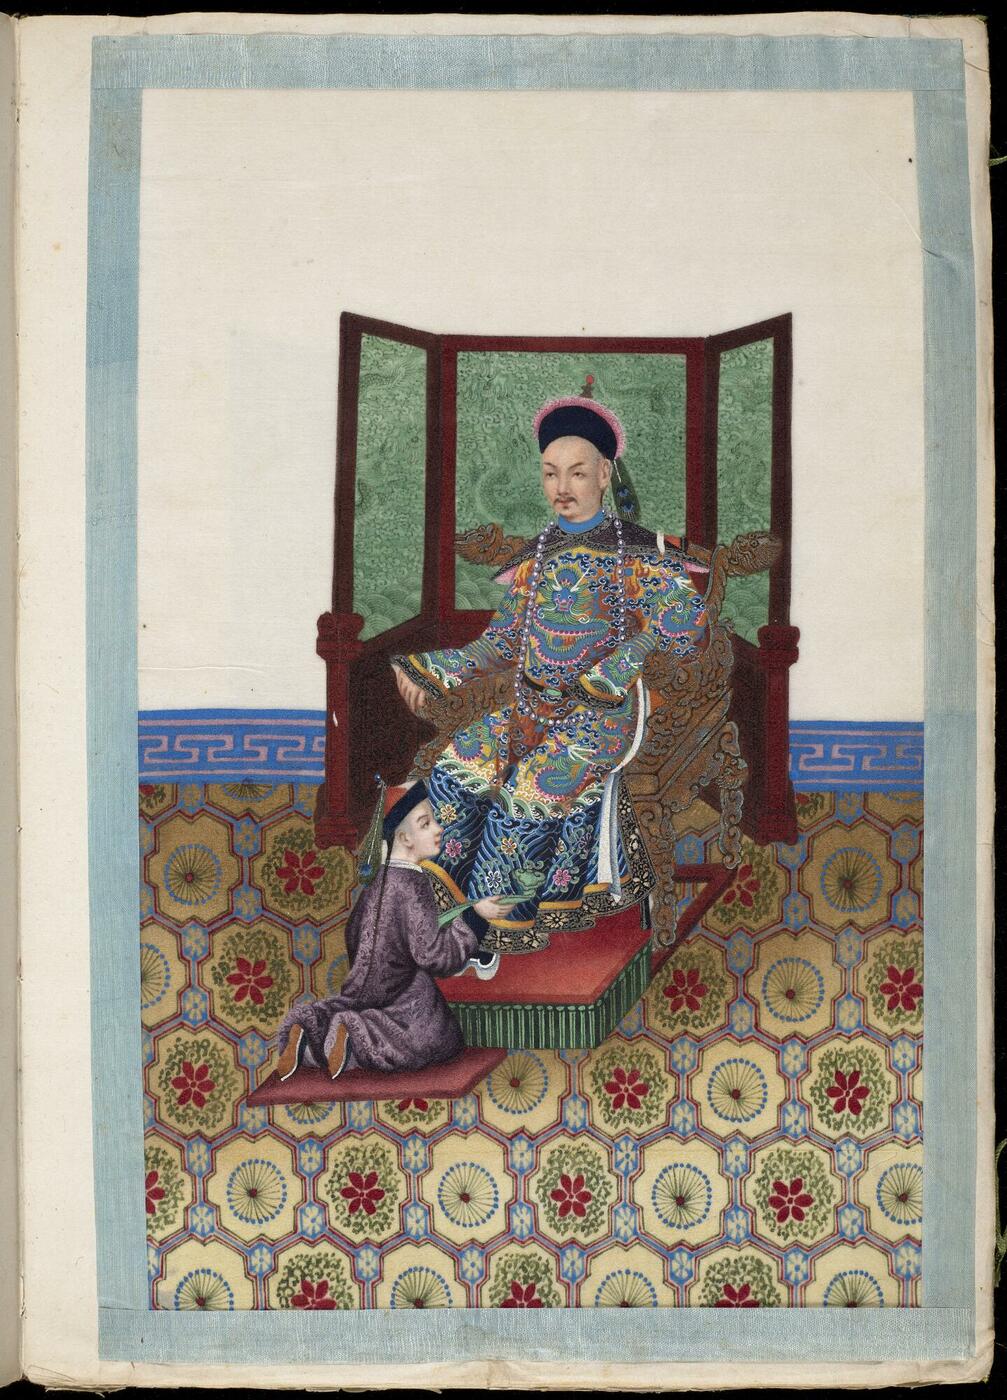 Portrait of Emperor Daoguang